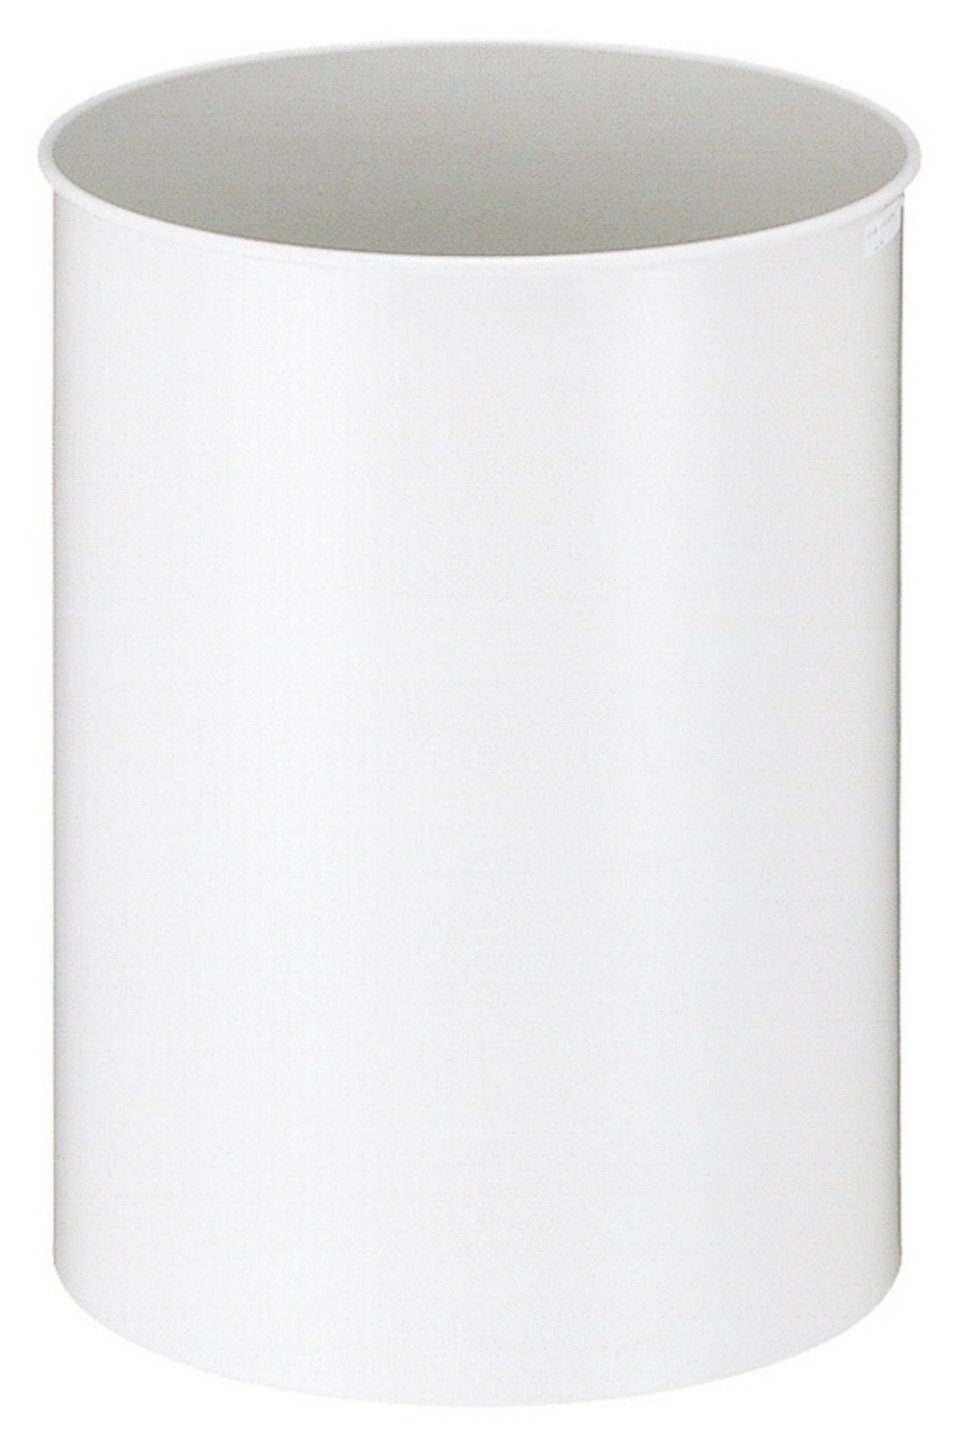 PROREGAL® Papierkorb  Grau Metall runder Stillvoller Weiß 30,5x25,5cm, HxØ Papierkorb, 15L